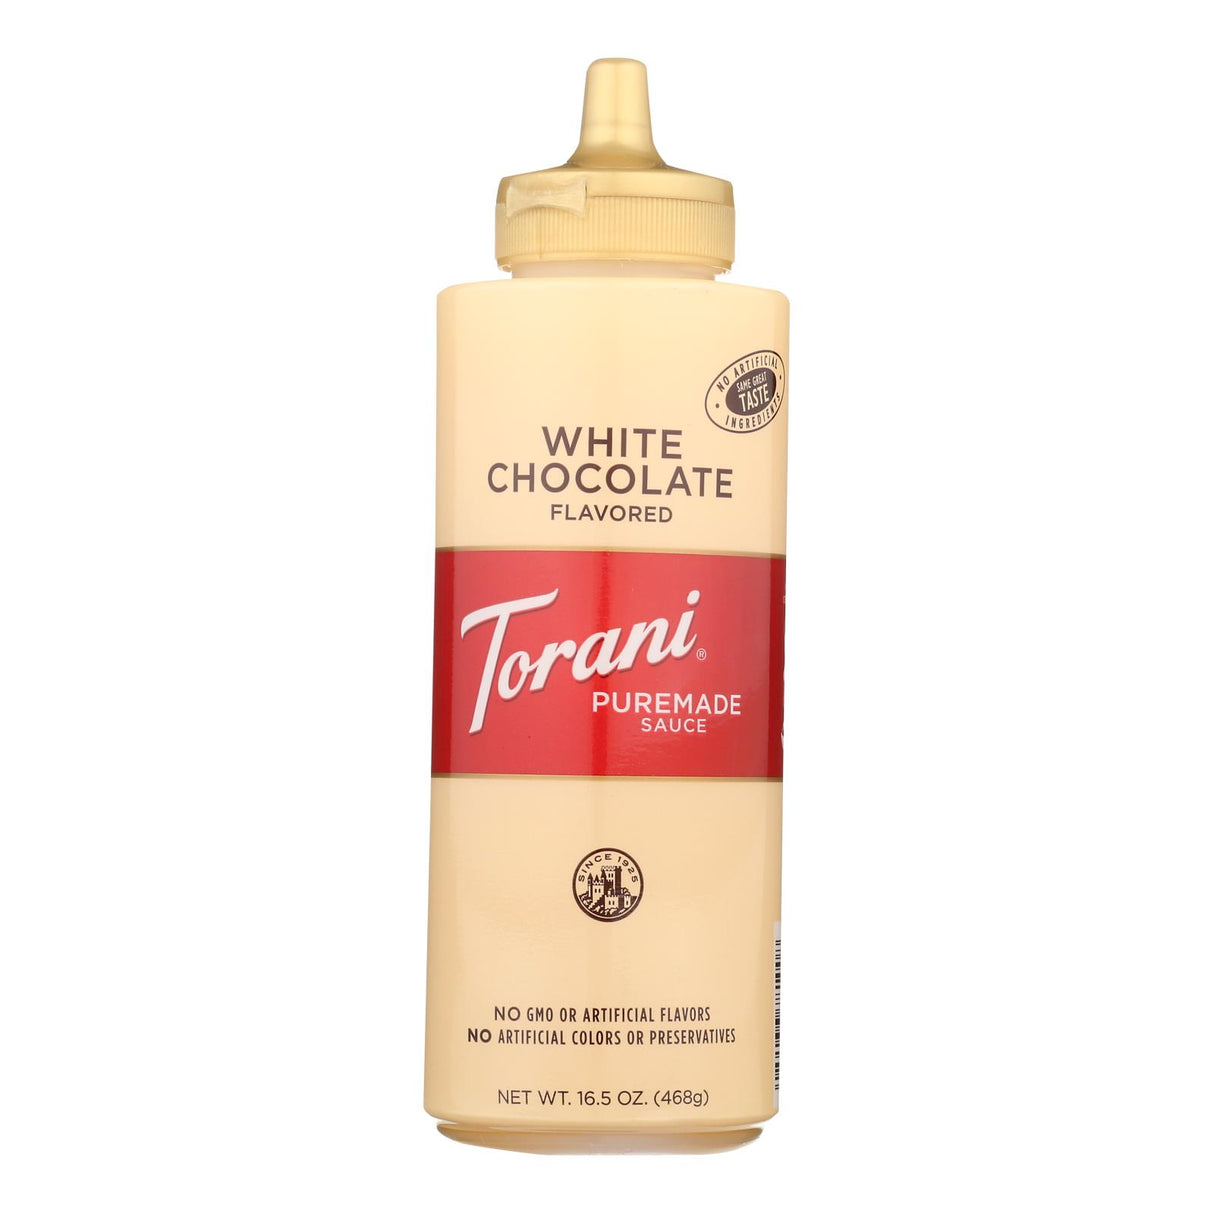 Torani White Chocolate Sauce (4-Pack, 16.5 oz. each) - Cozy Farm 